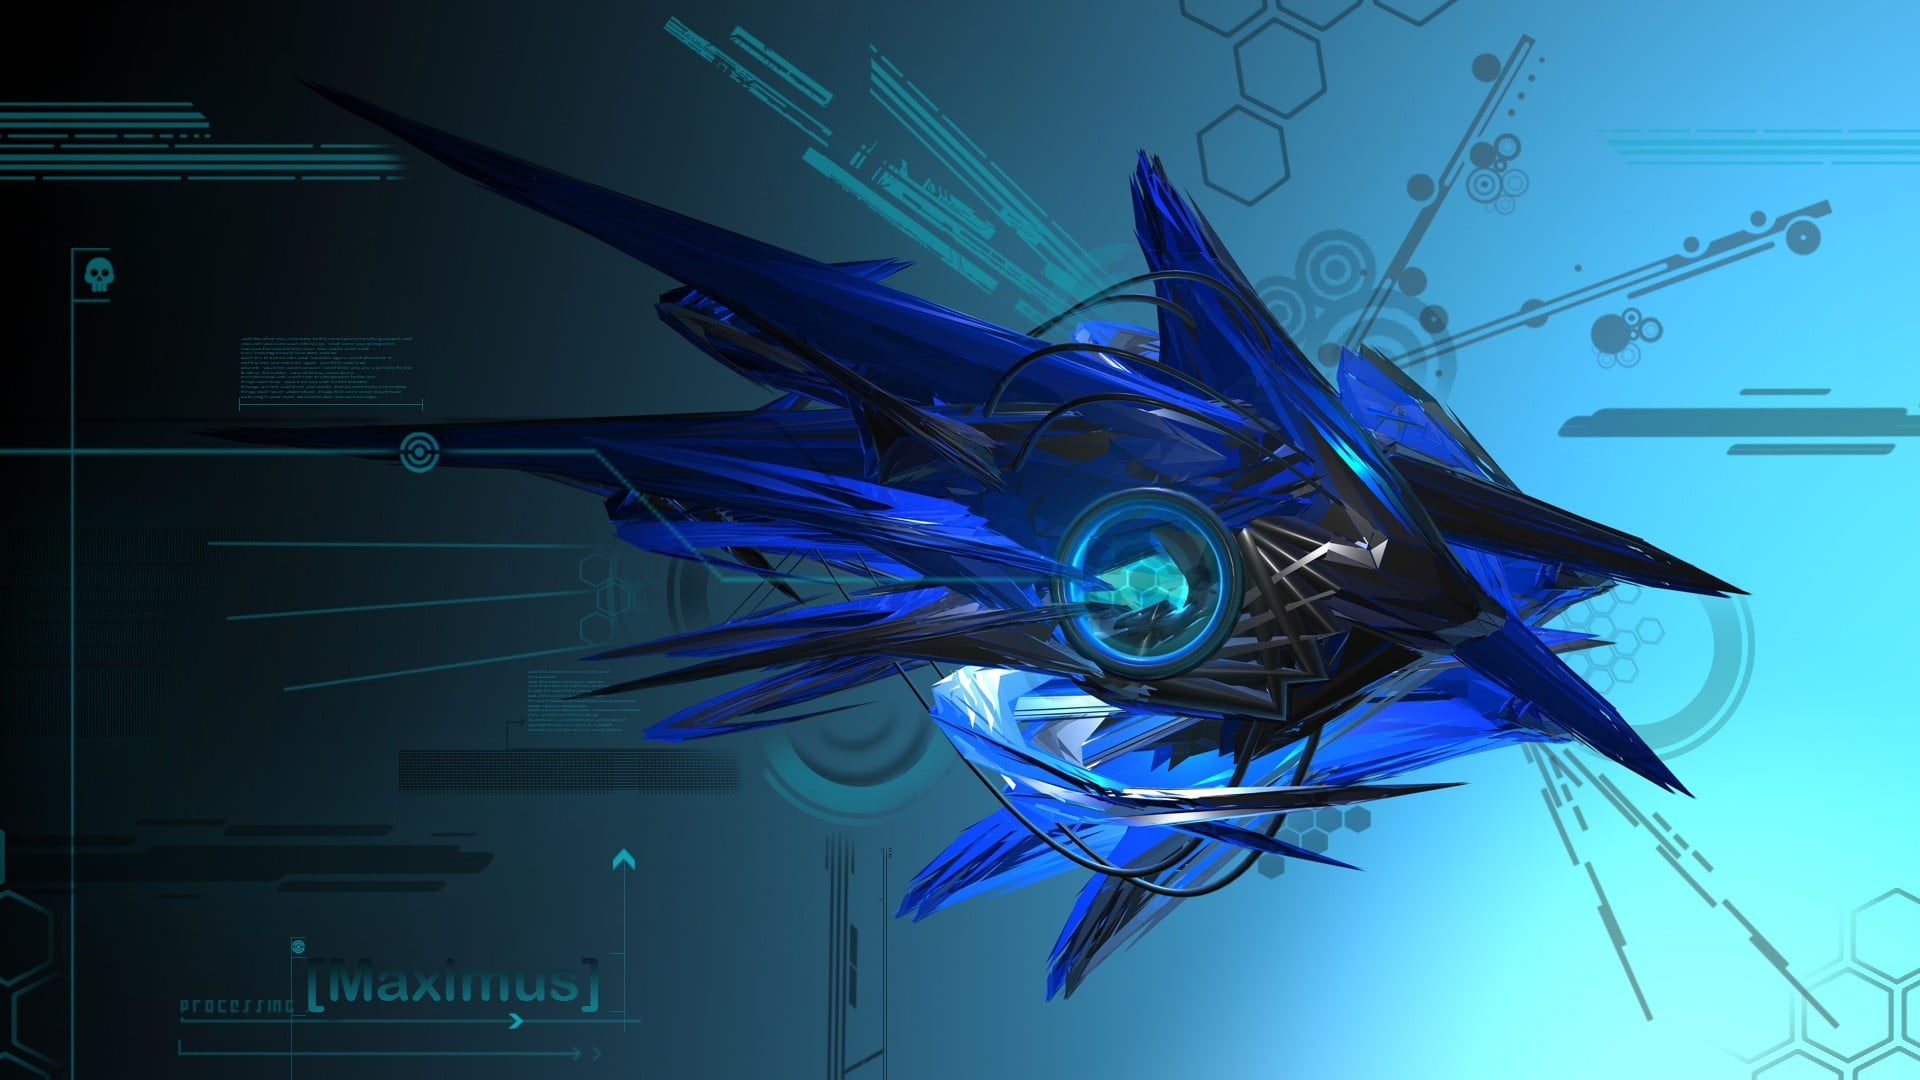 blue and black Maximus wallpaper, blue and black Maximus digital illustration